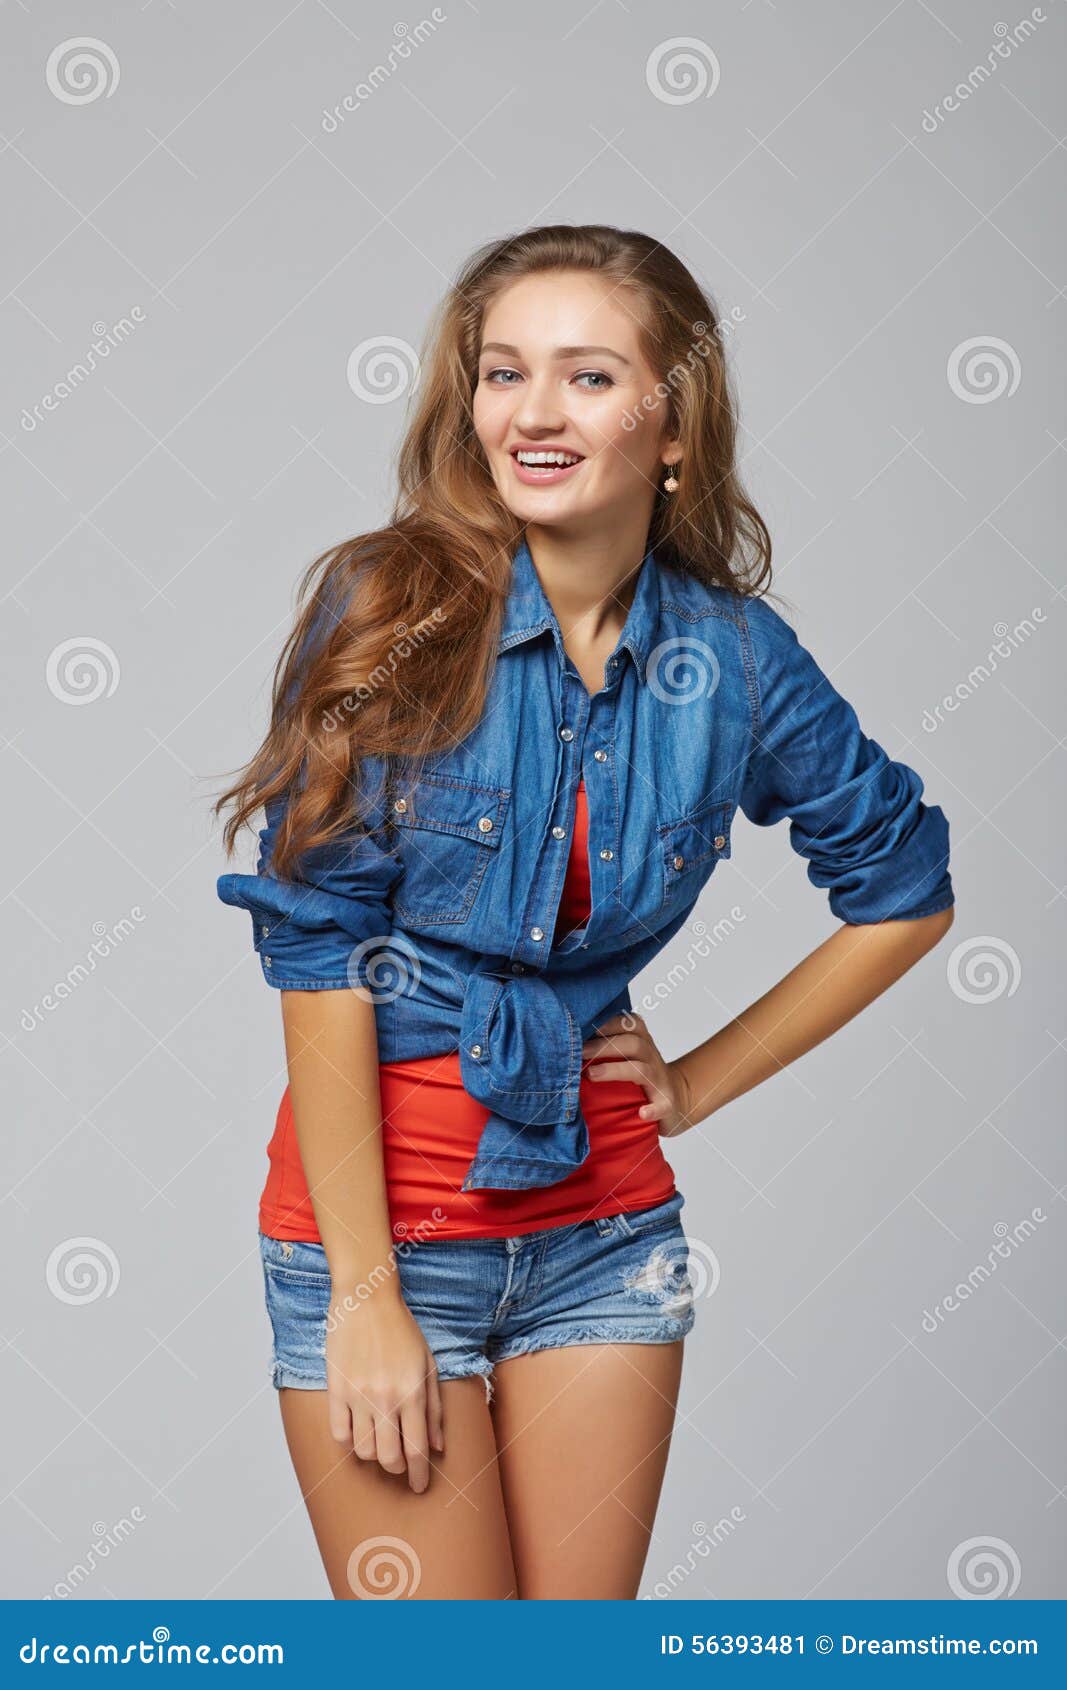 Denim Style Portrait of Teen Girl, Over Gray Background Stock Image ...